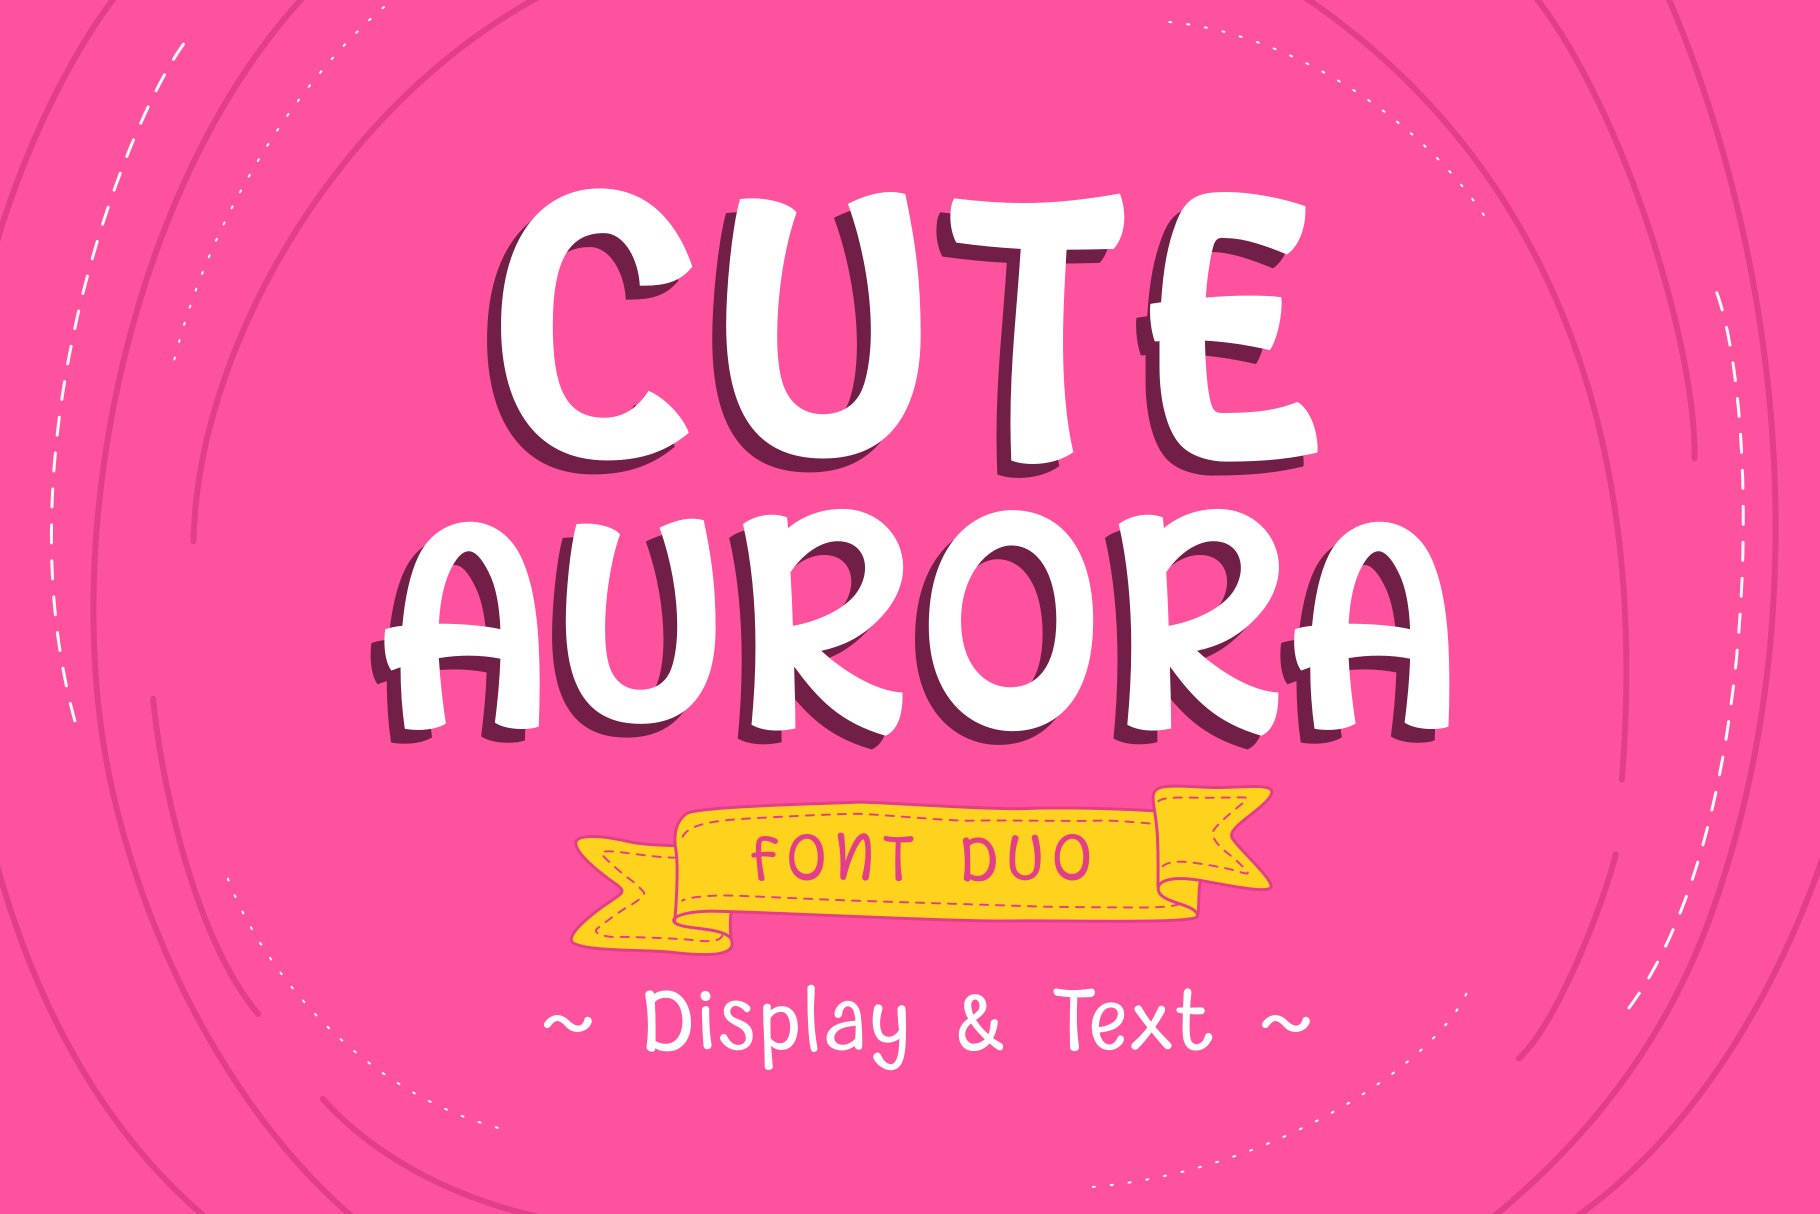 Cute Aurora cover image.